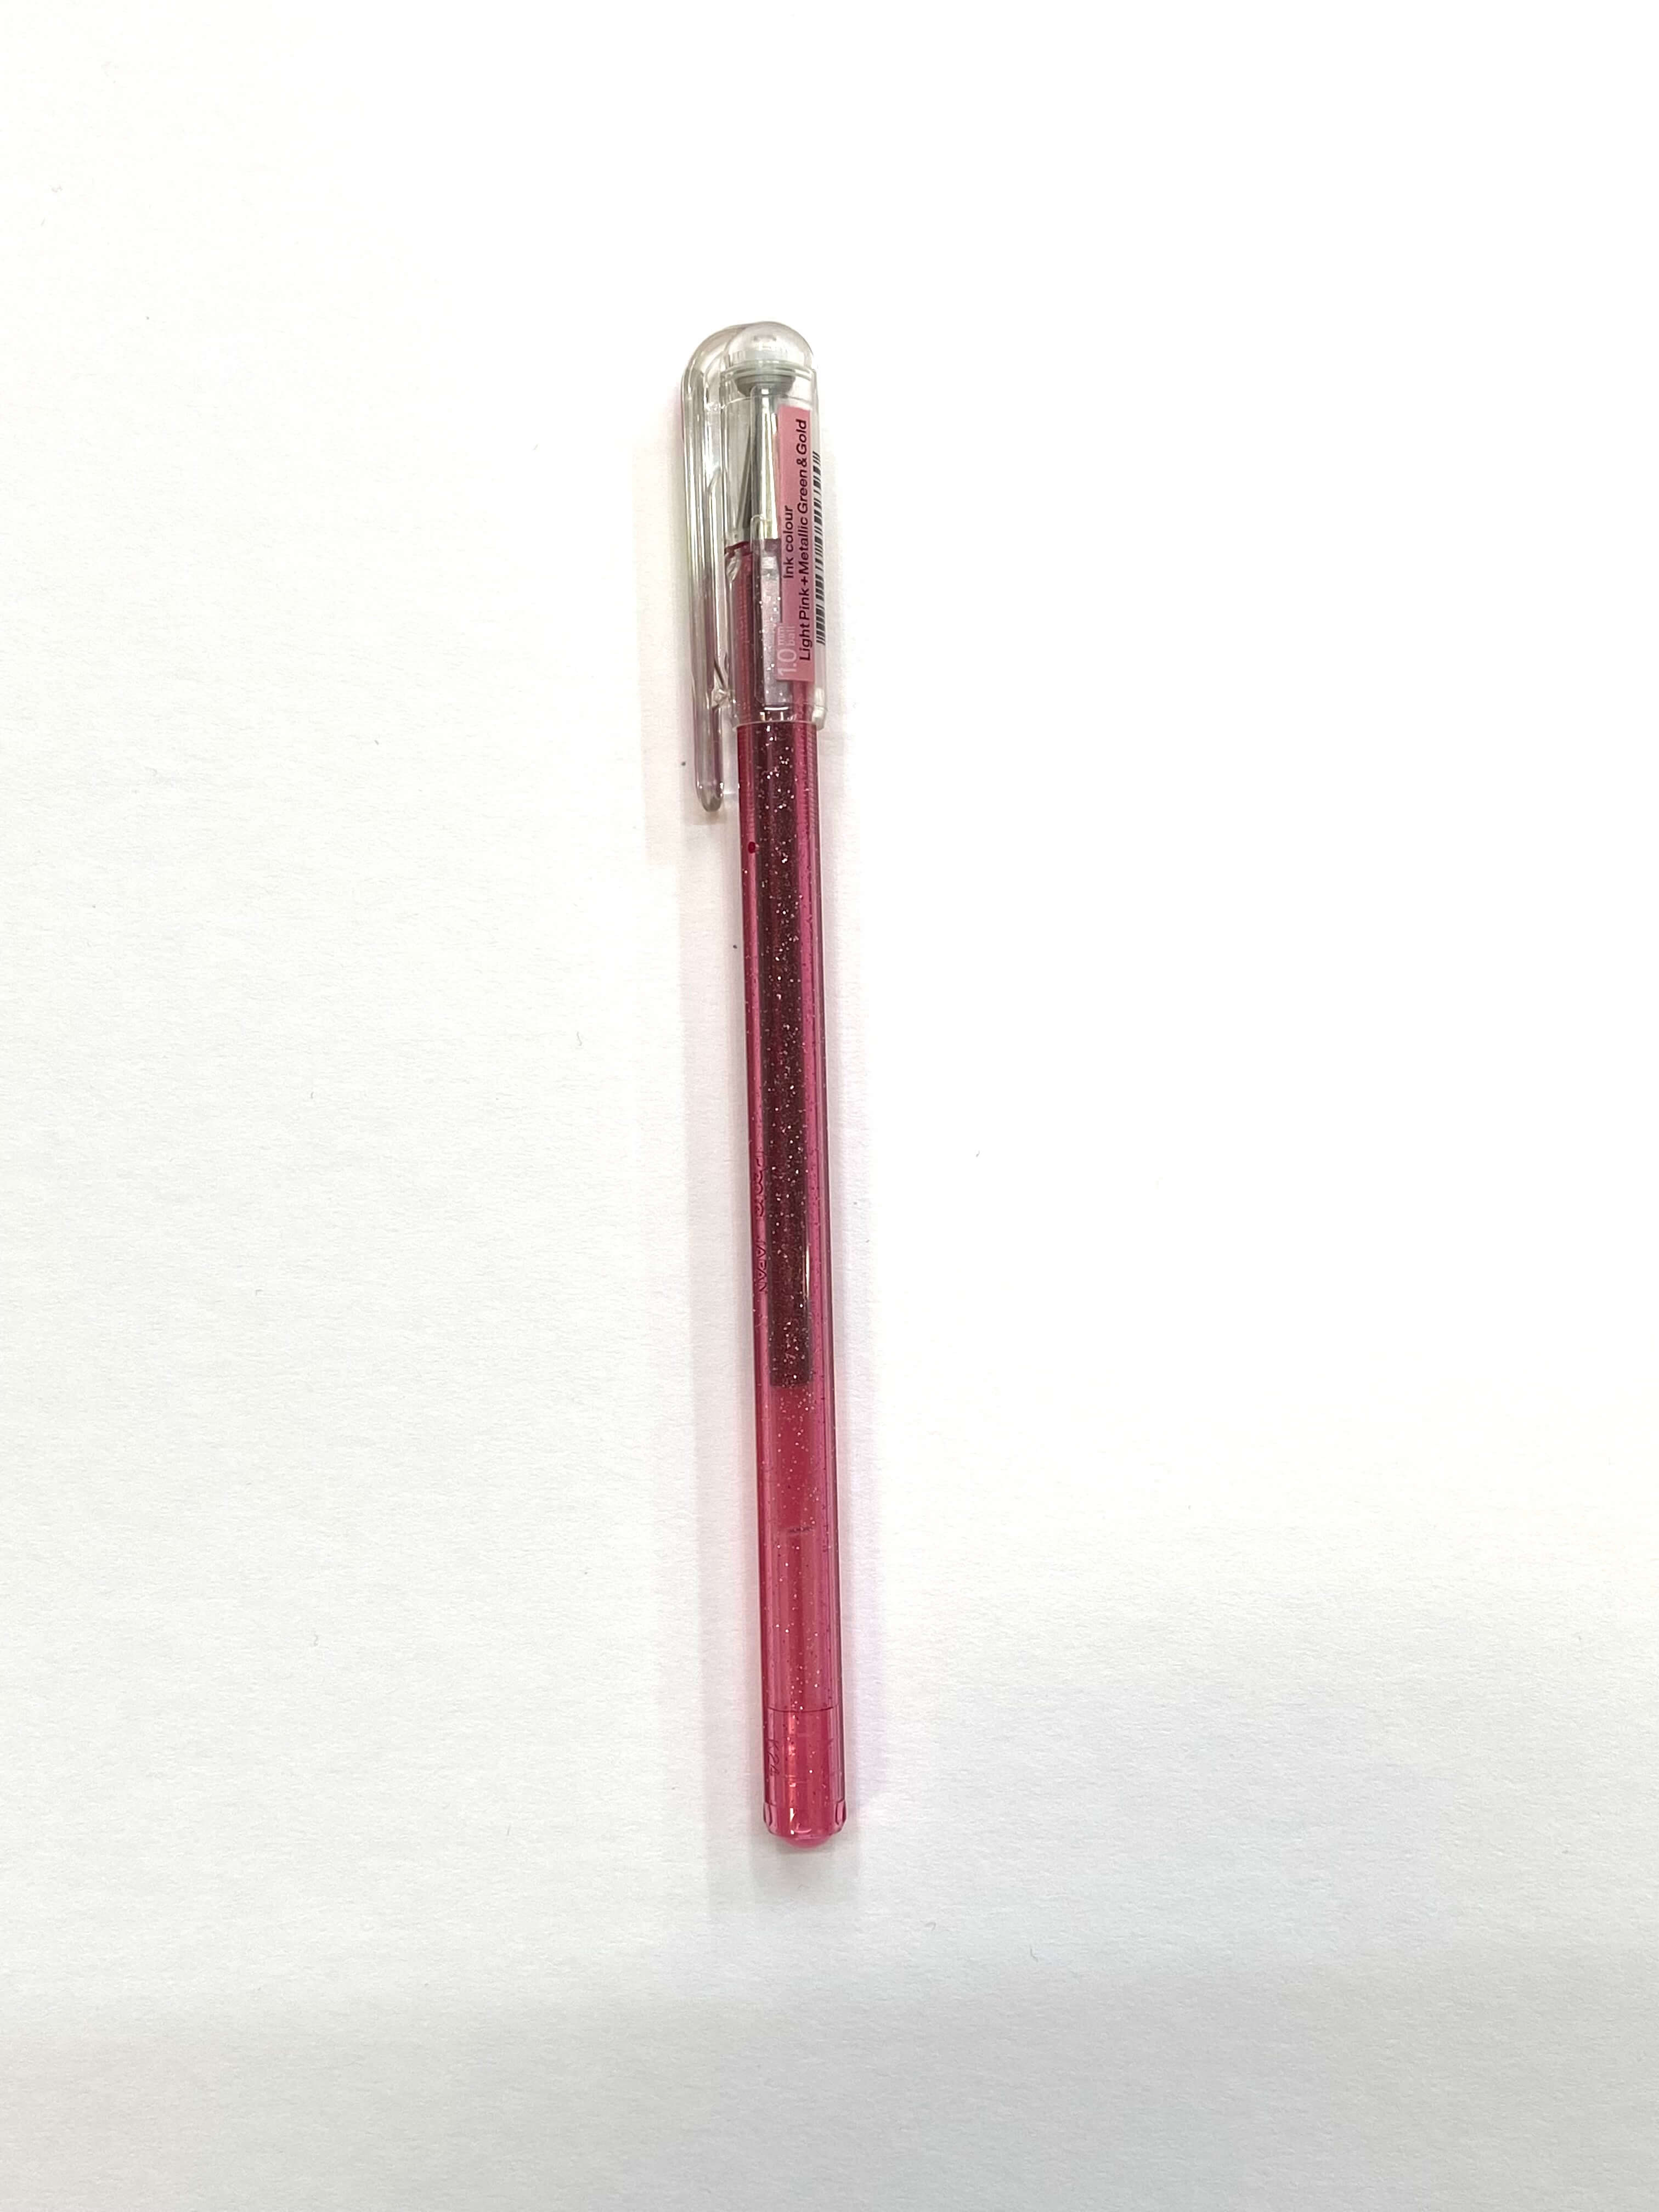 Pentel Dual metallic pen